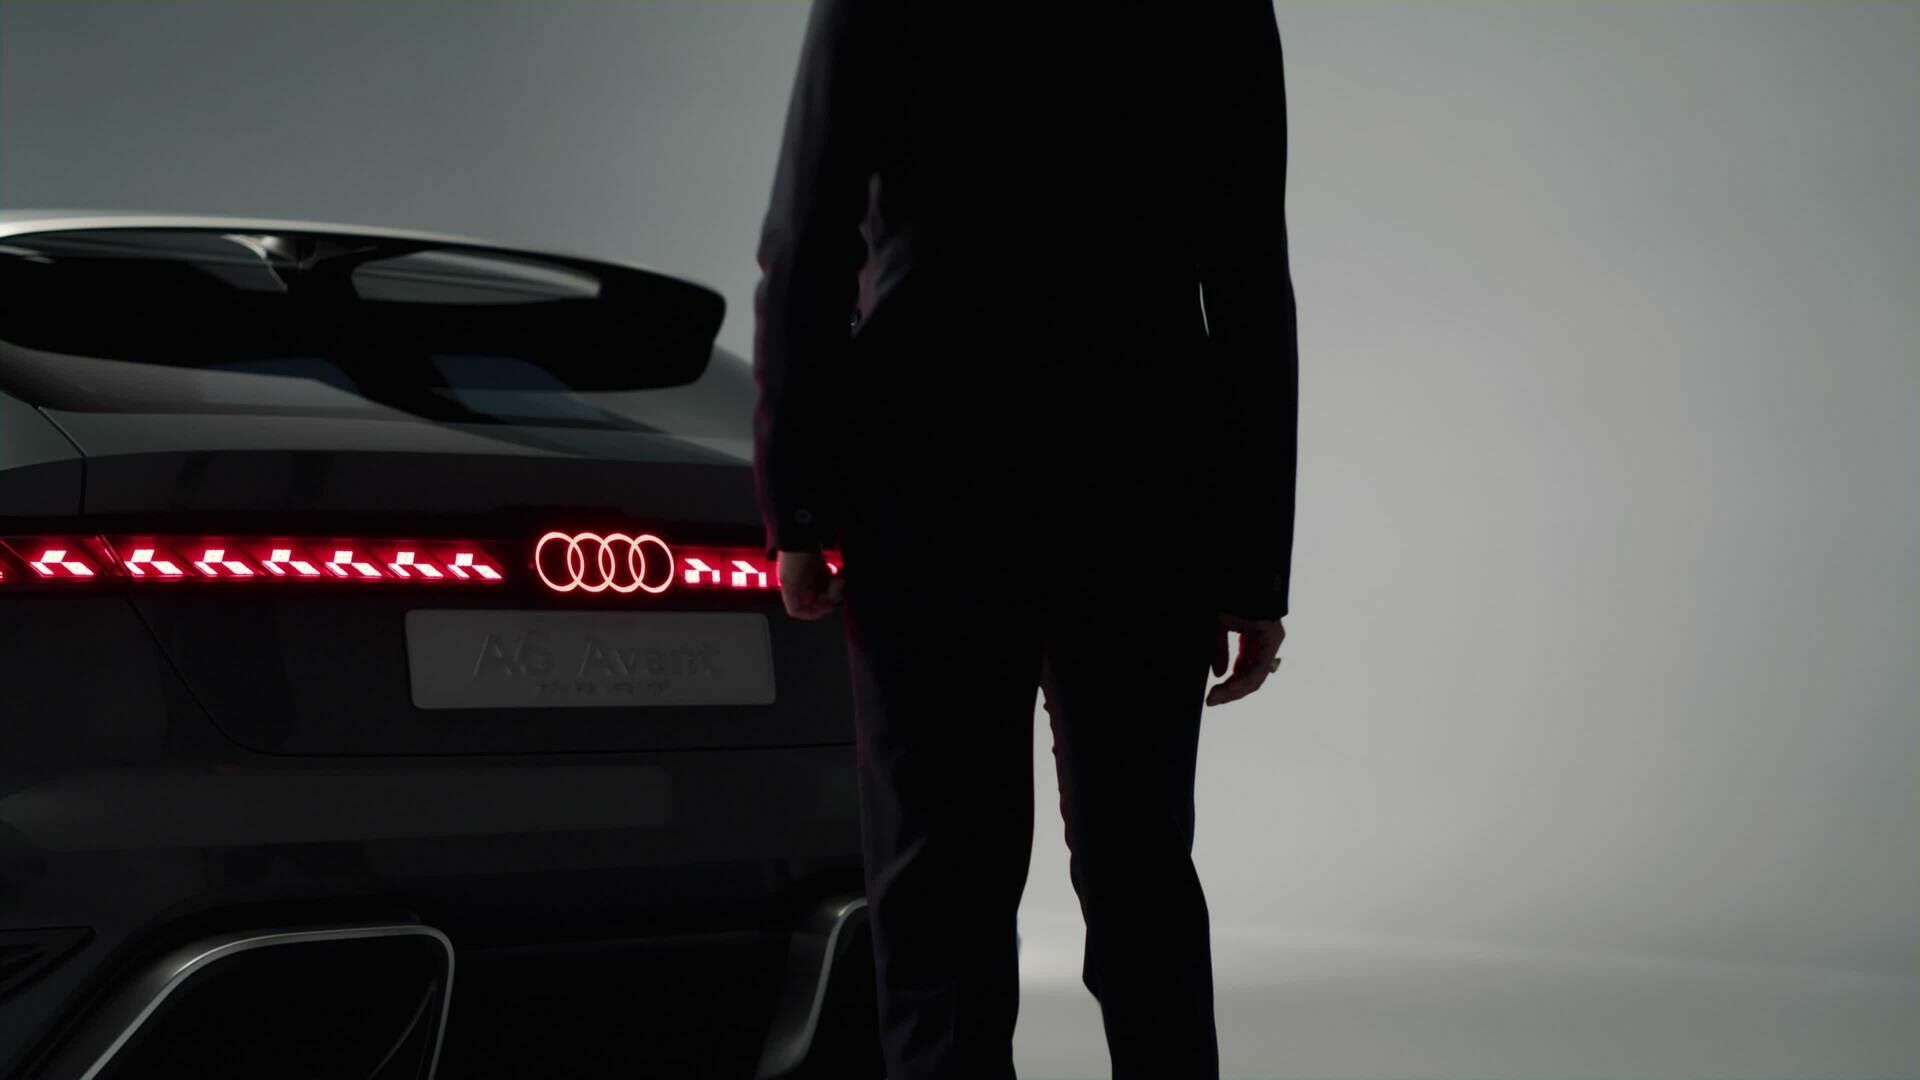 The technology of the Audi A6 Avant e-tron concept